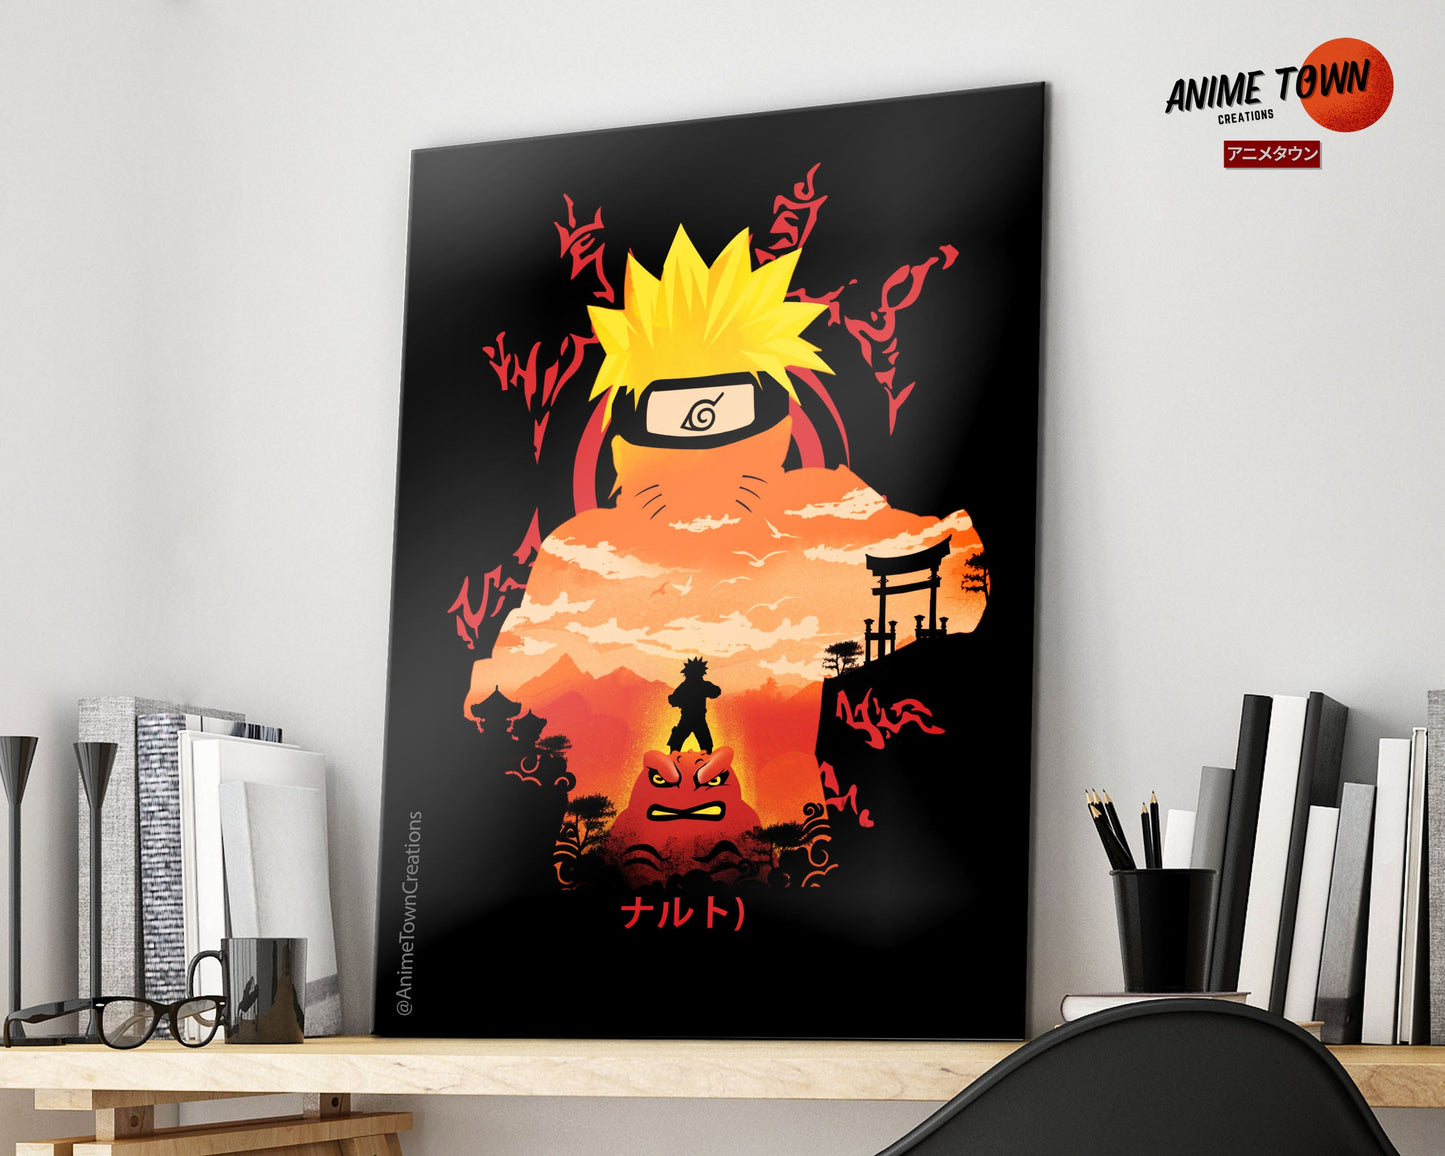 Naruto - Coolbits Artworks